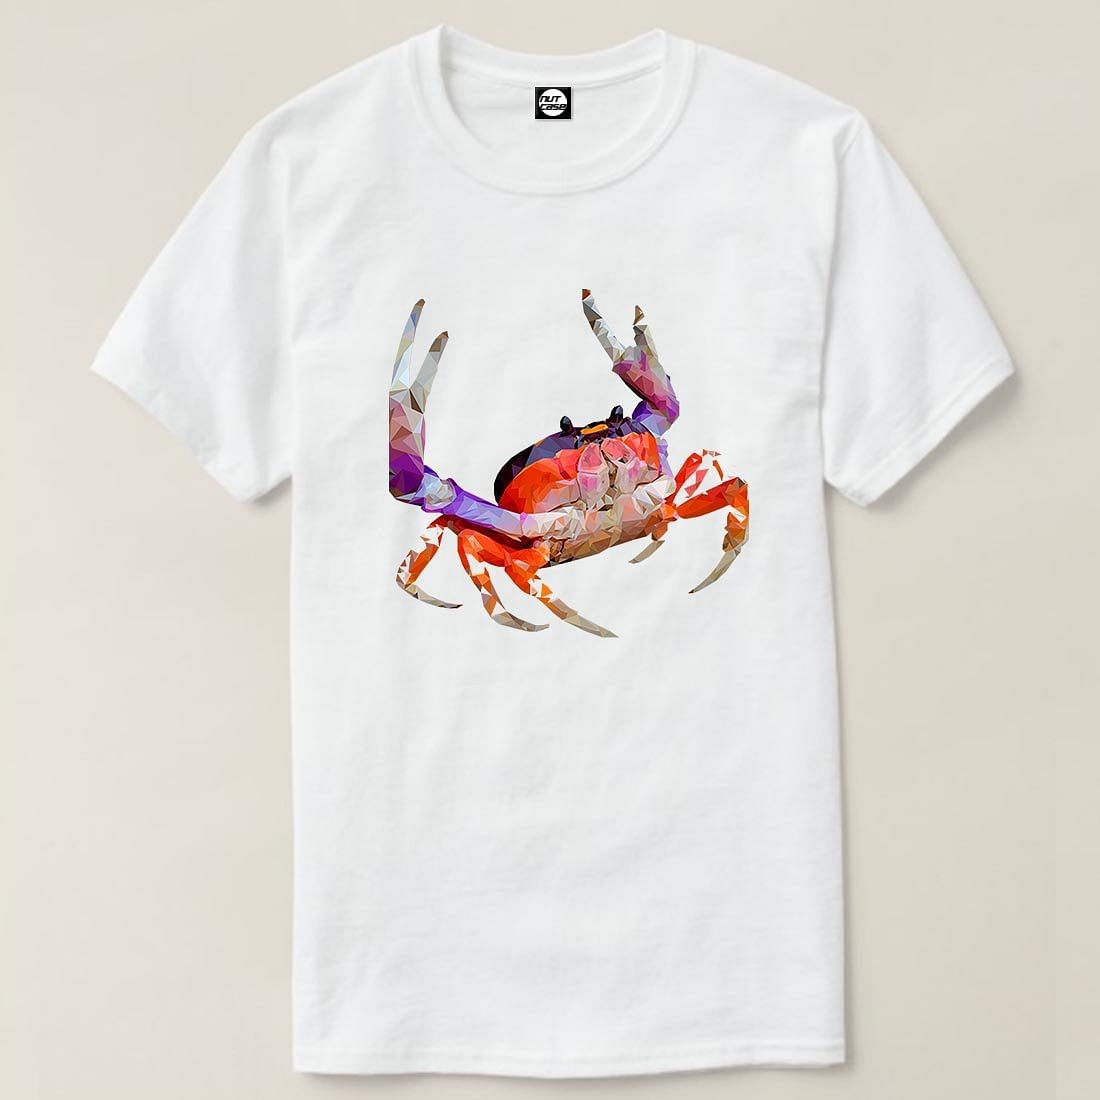 Nutcase Designer Round Neck Men's T-Shirt Wrinkle-Free Poly Cotton Tees - Crab Nutcase